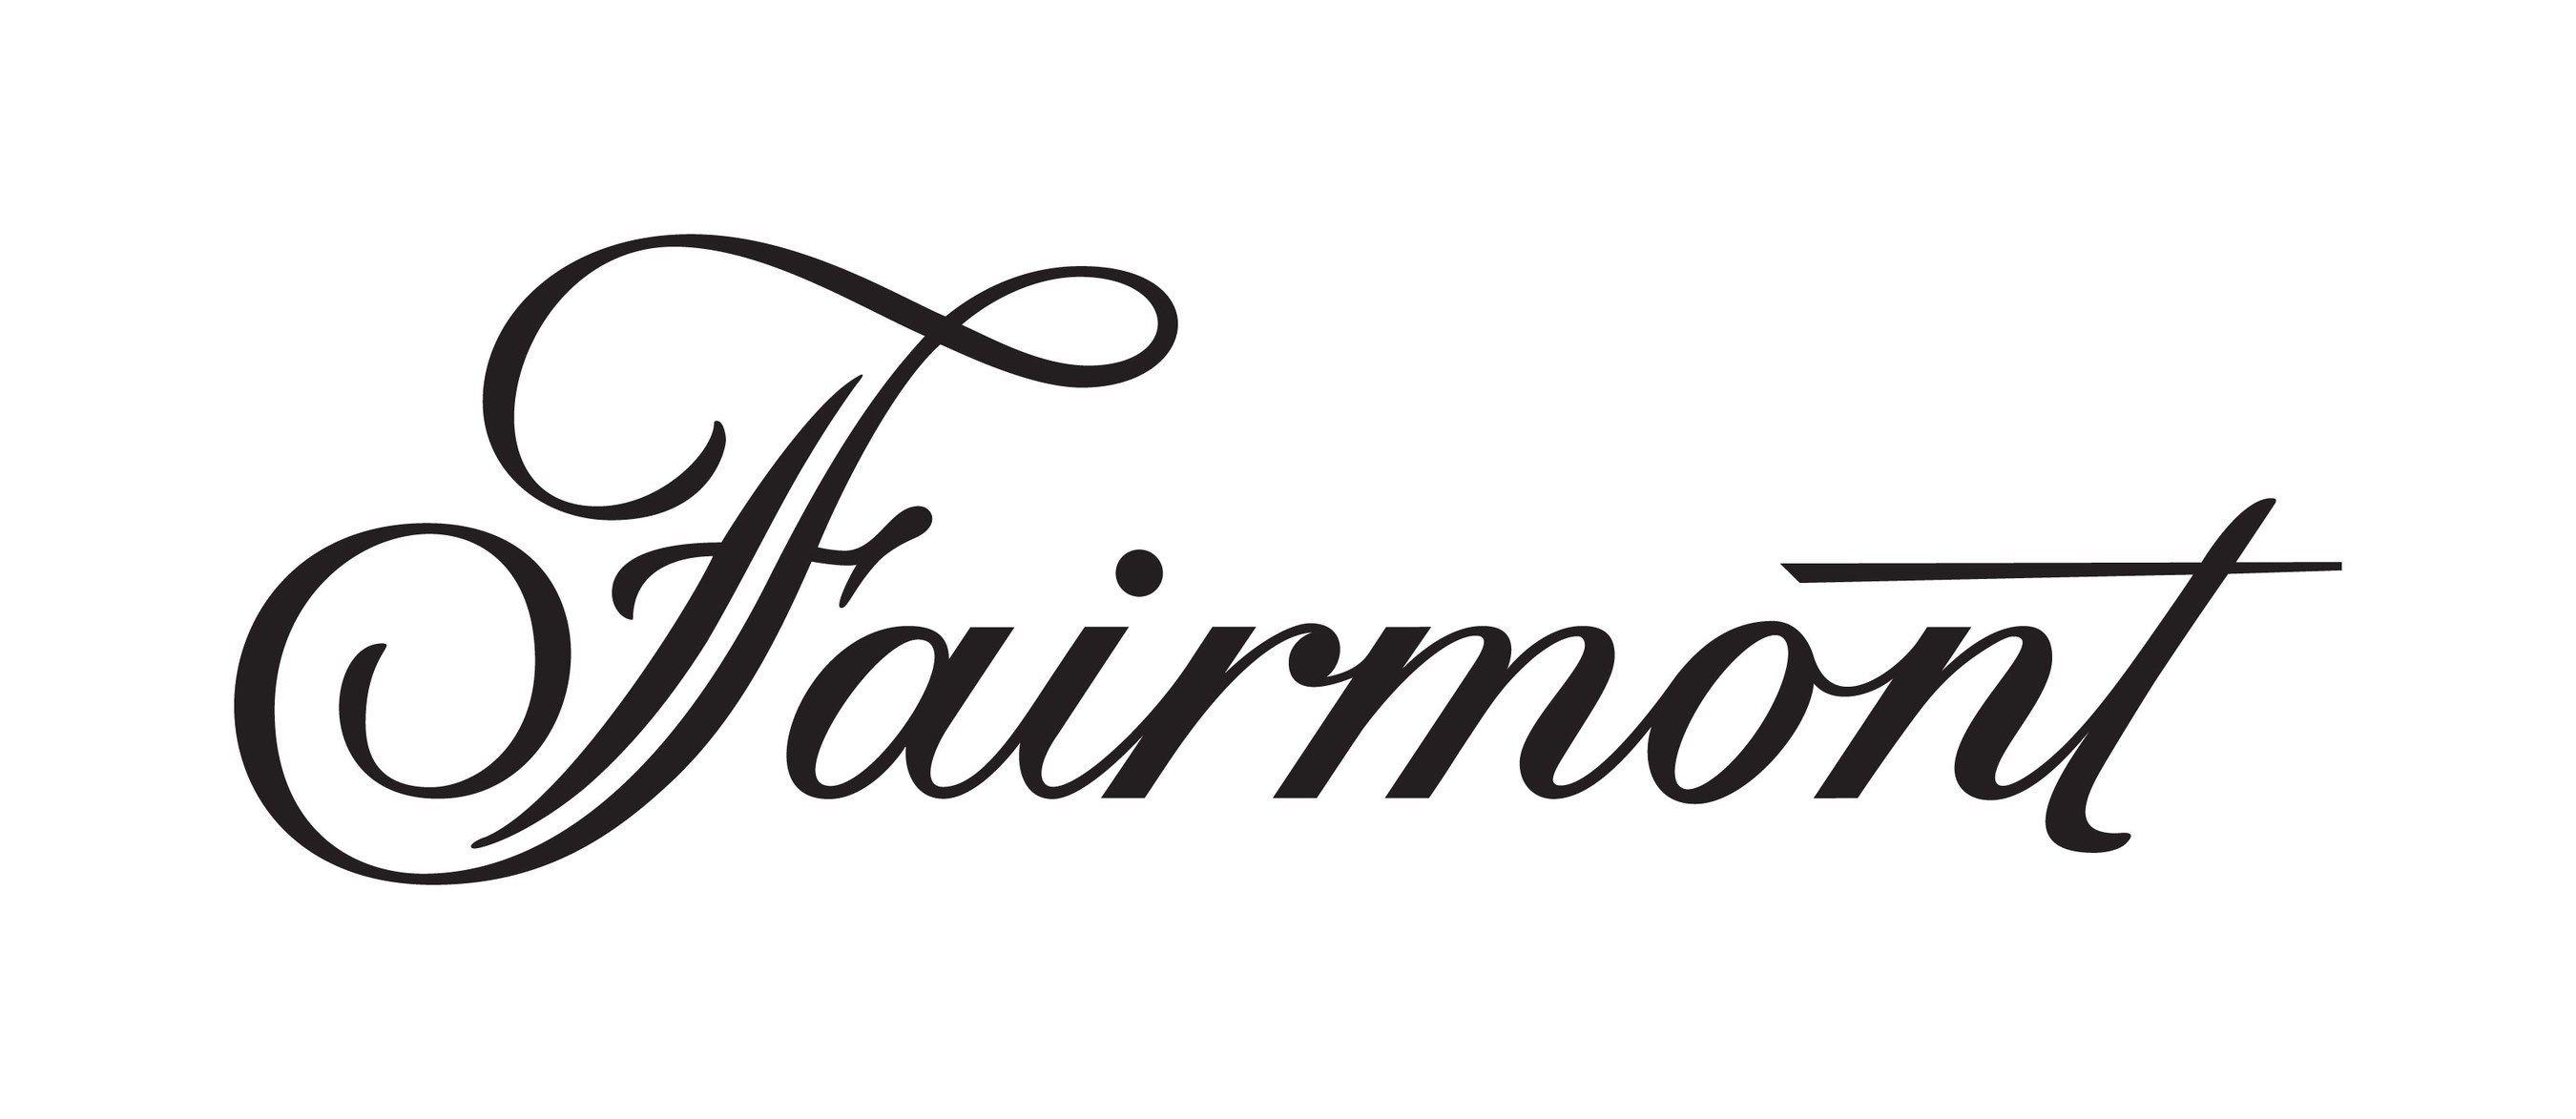 Original Fairmont Logo - CNW | Celebrate Canada's 150th Birthday With Fairmont Hotels ...